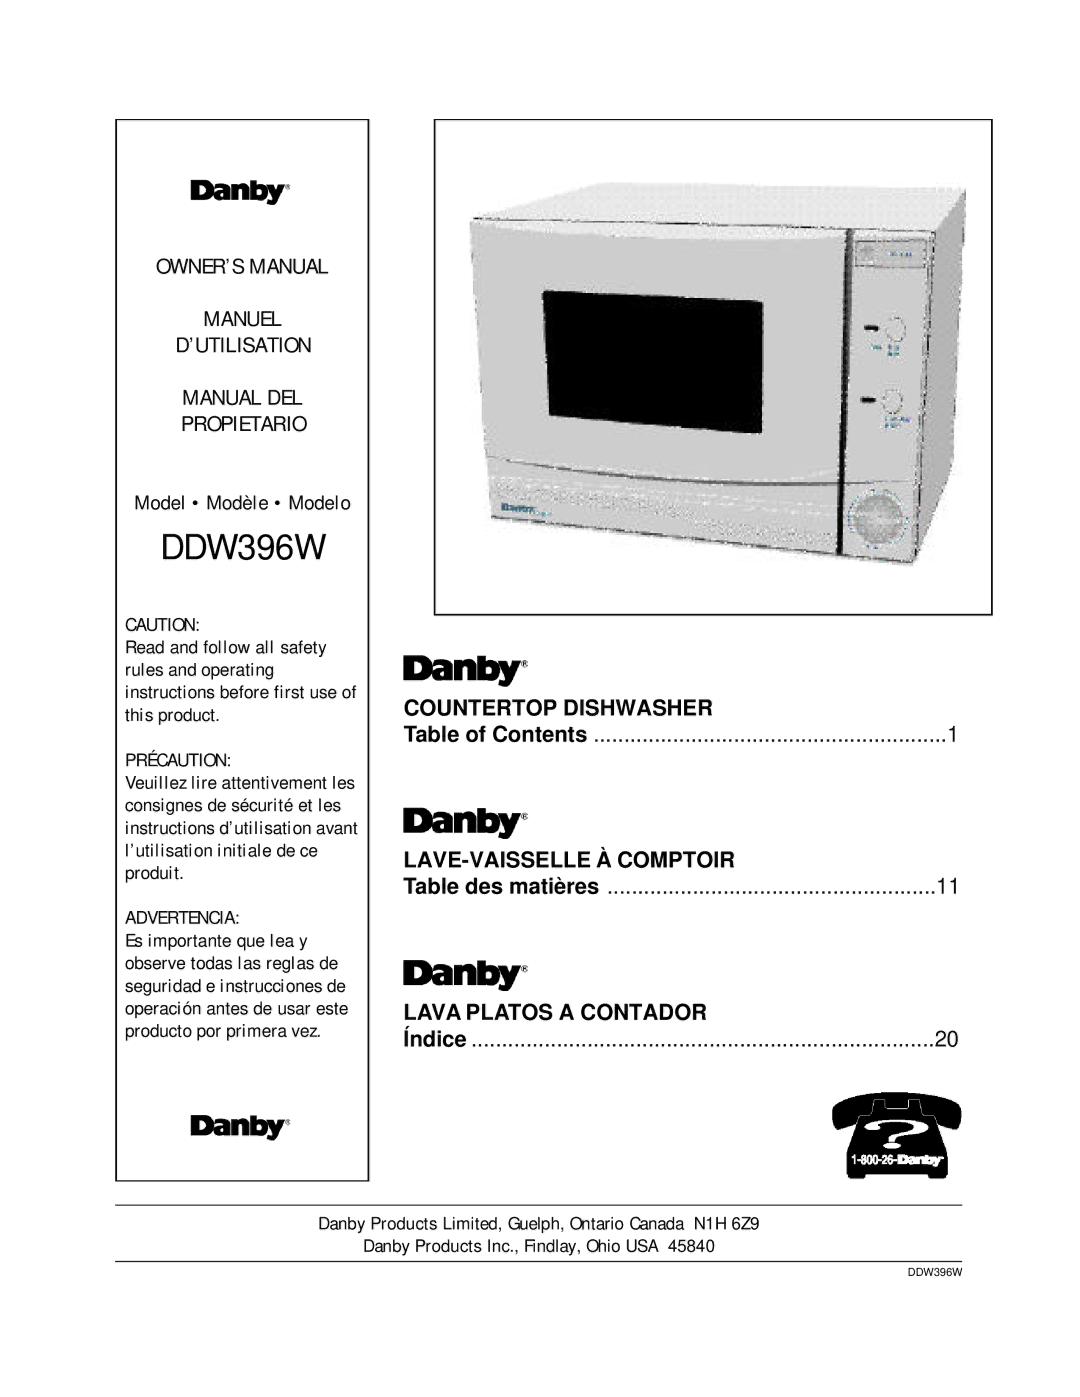 Danby DDW396W owner manual Précaution, Advertencia 